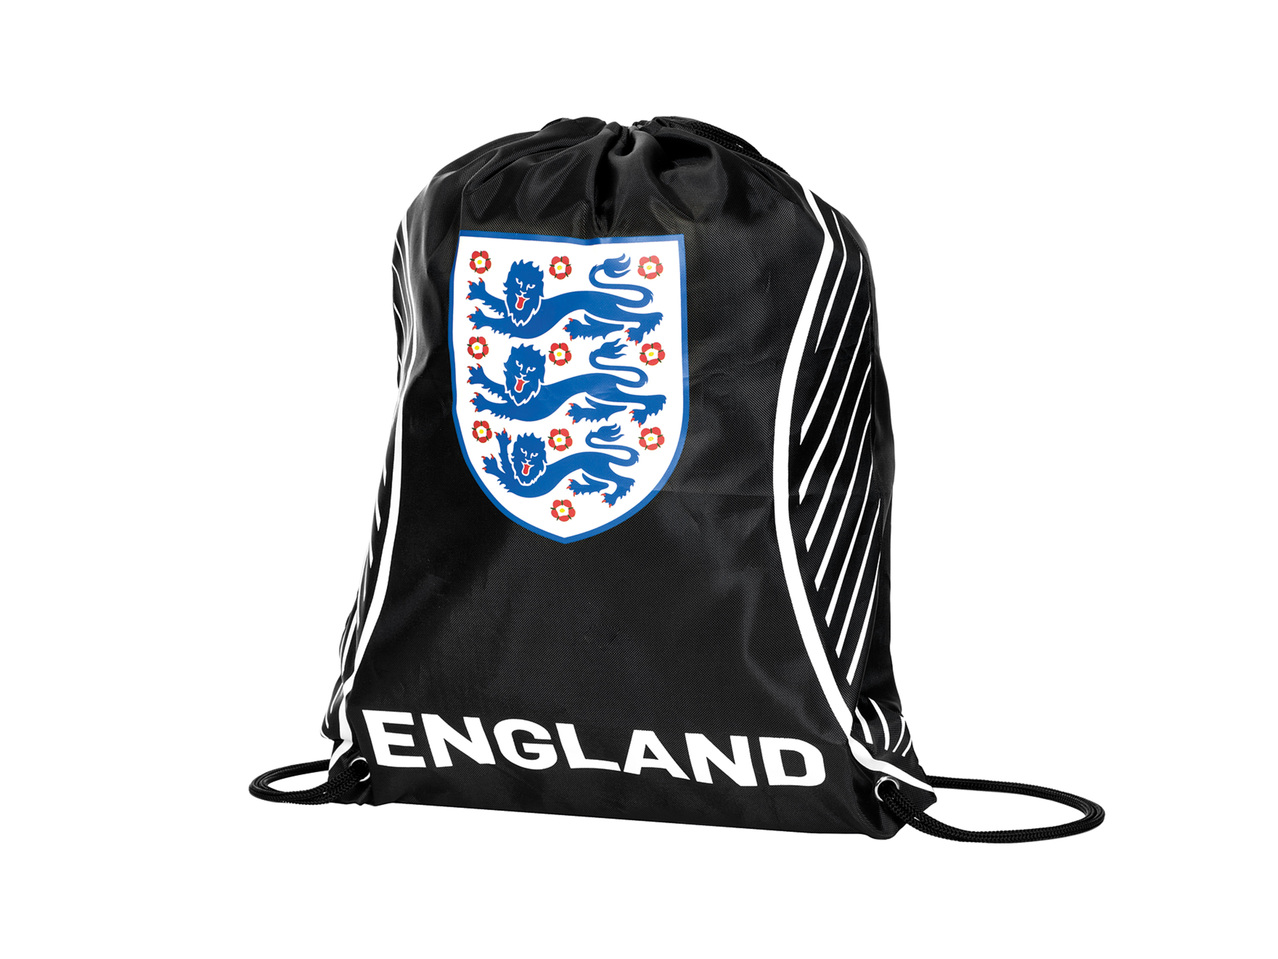 England Gym Bag1